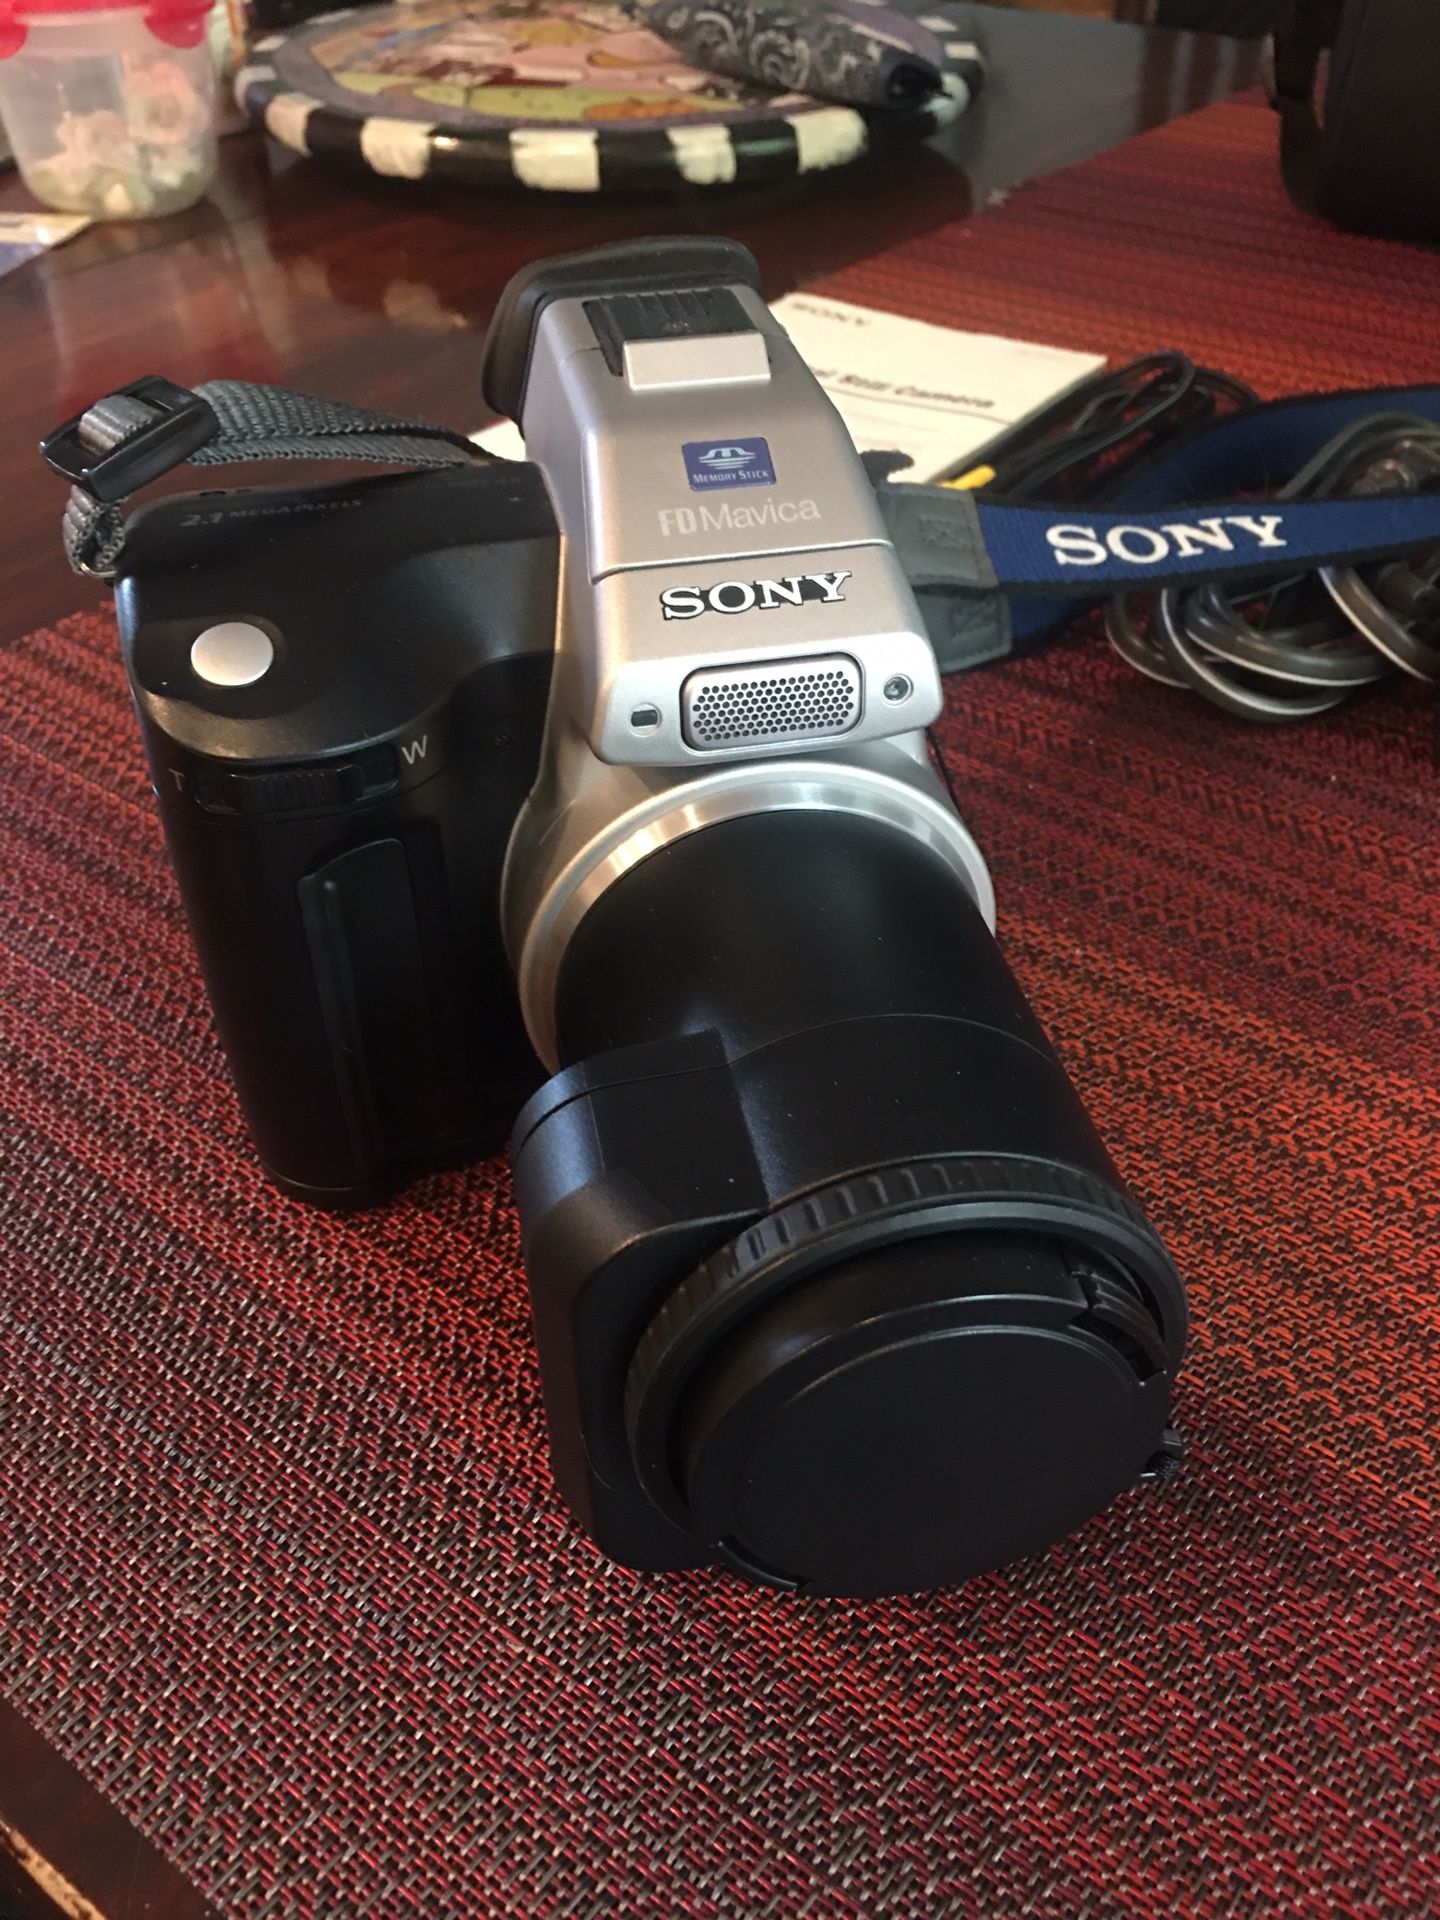 Sony digital camera for sale - MVC-FD97